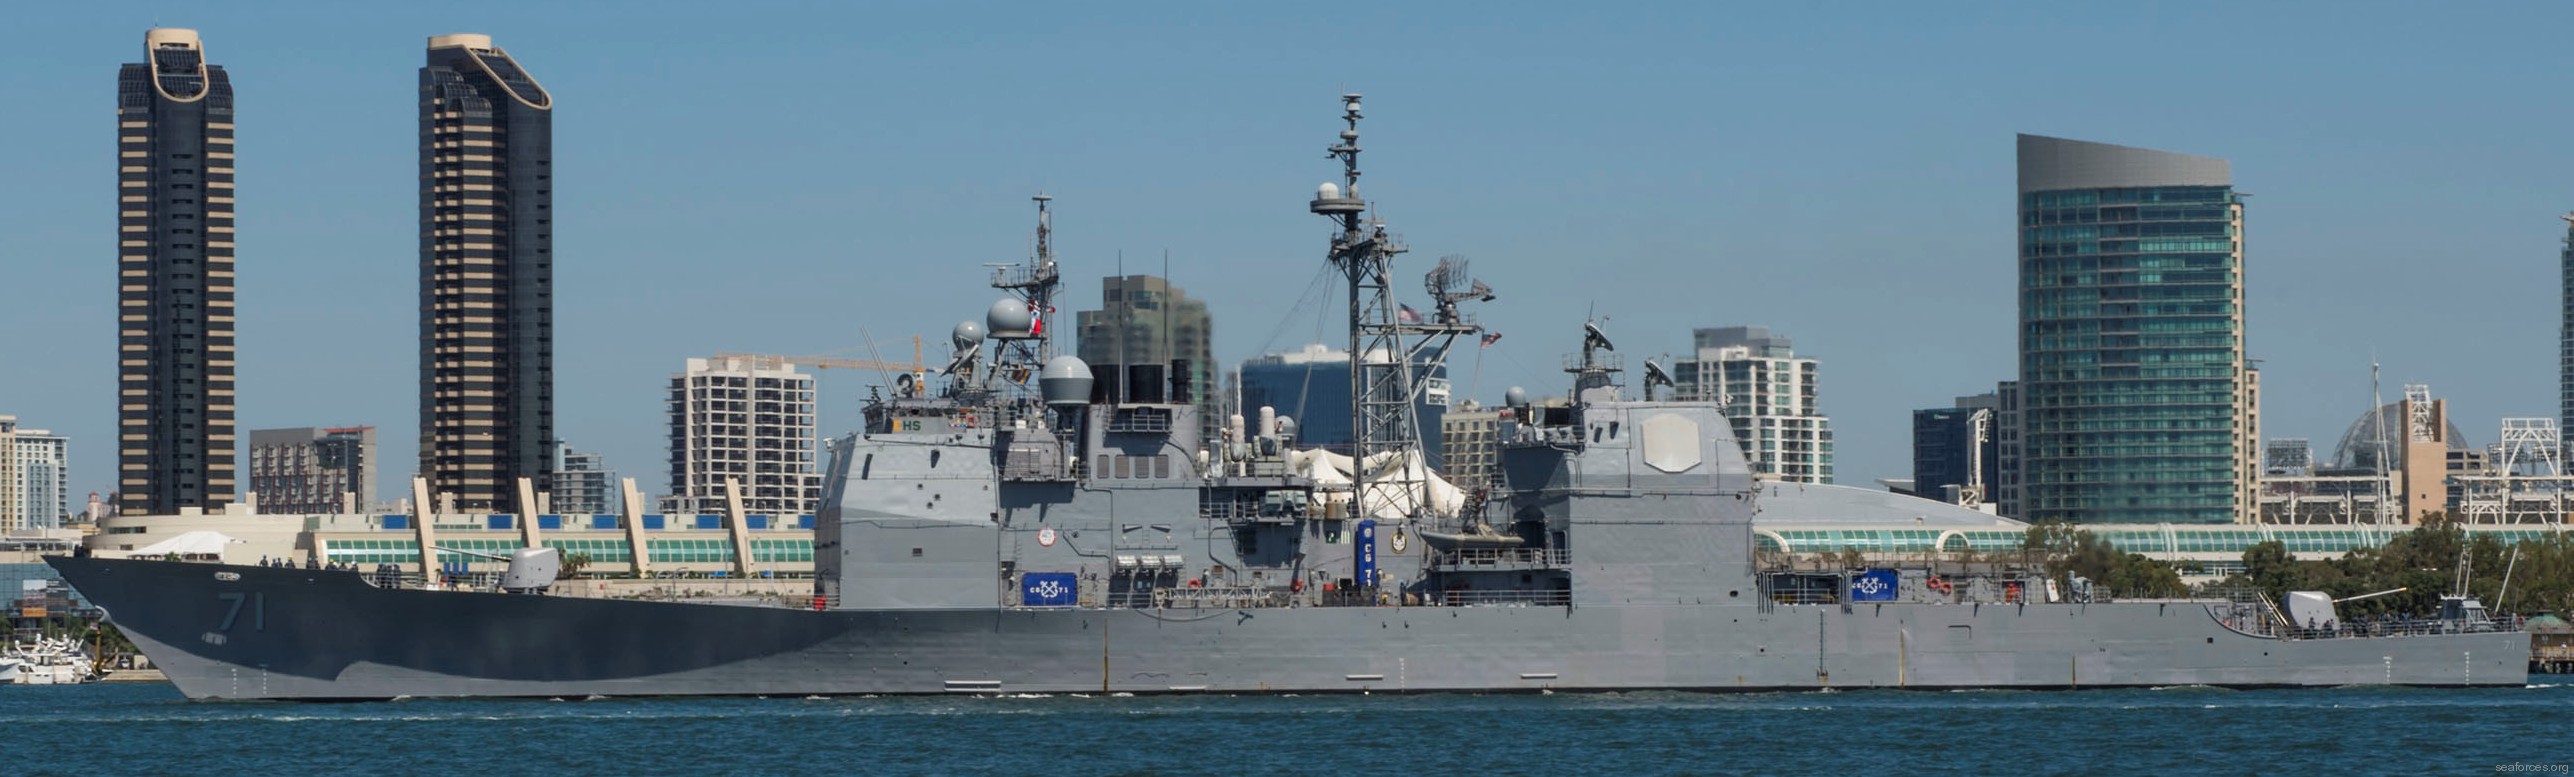 cg-71 uss cape st. george ticonderoga class guided missile cruiser us navy 70 coronado california